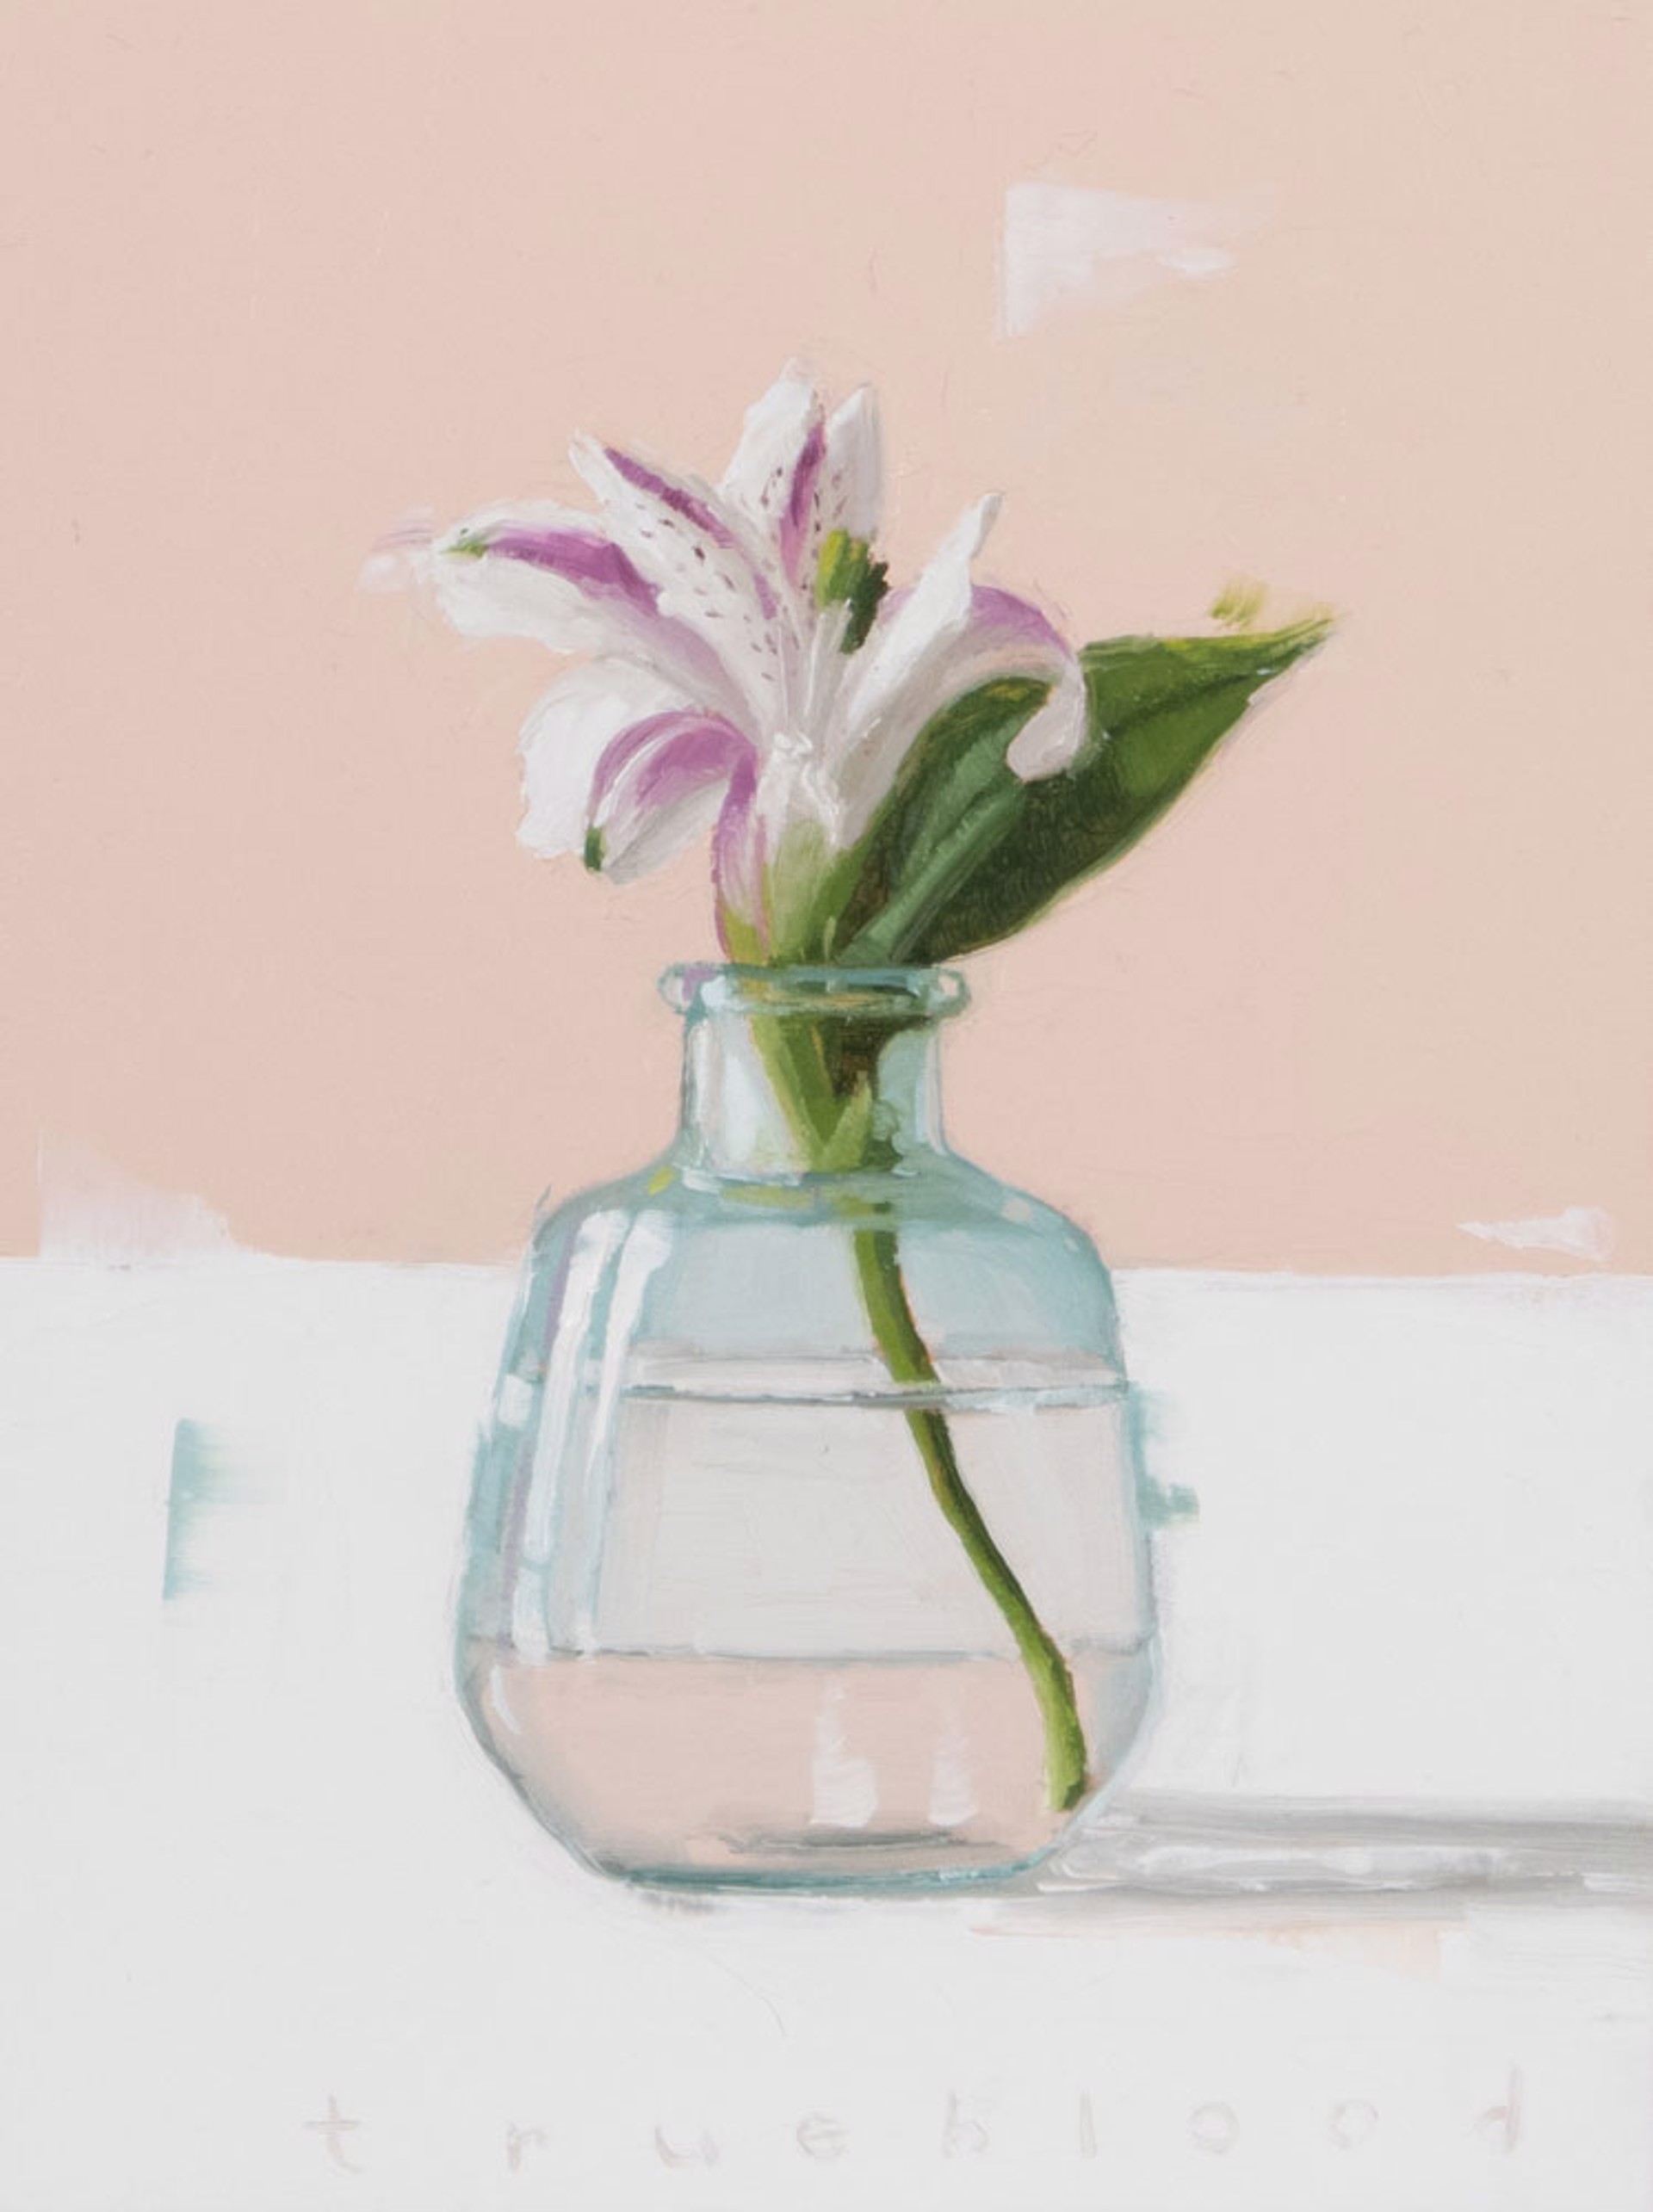 Peruvian Lily by Megan Trueblood